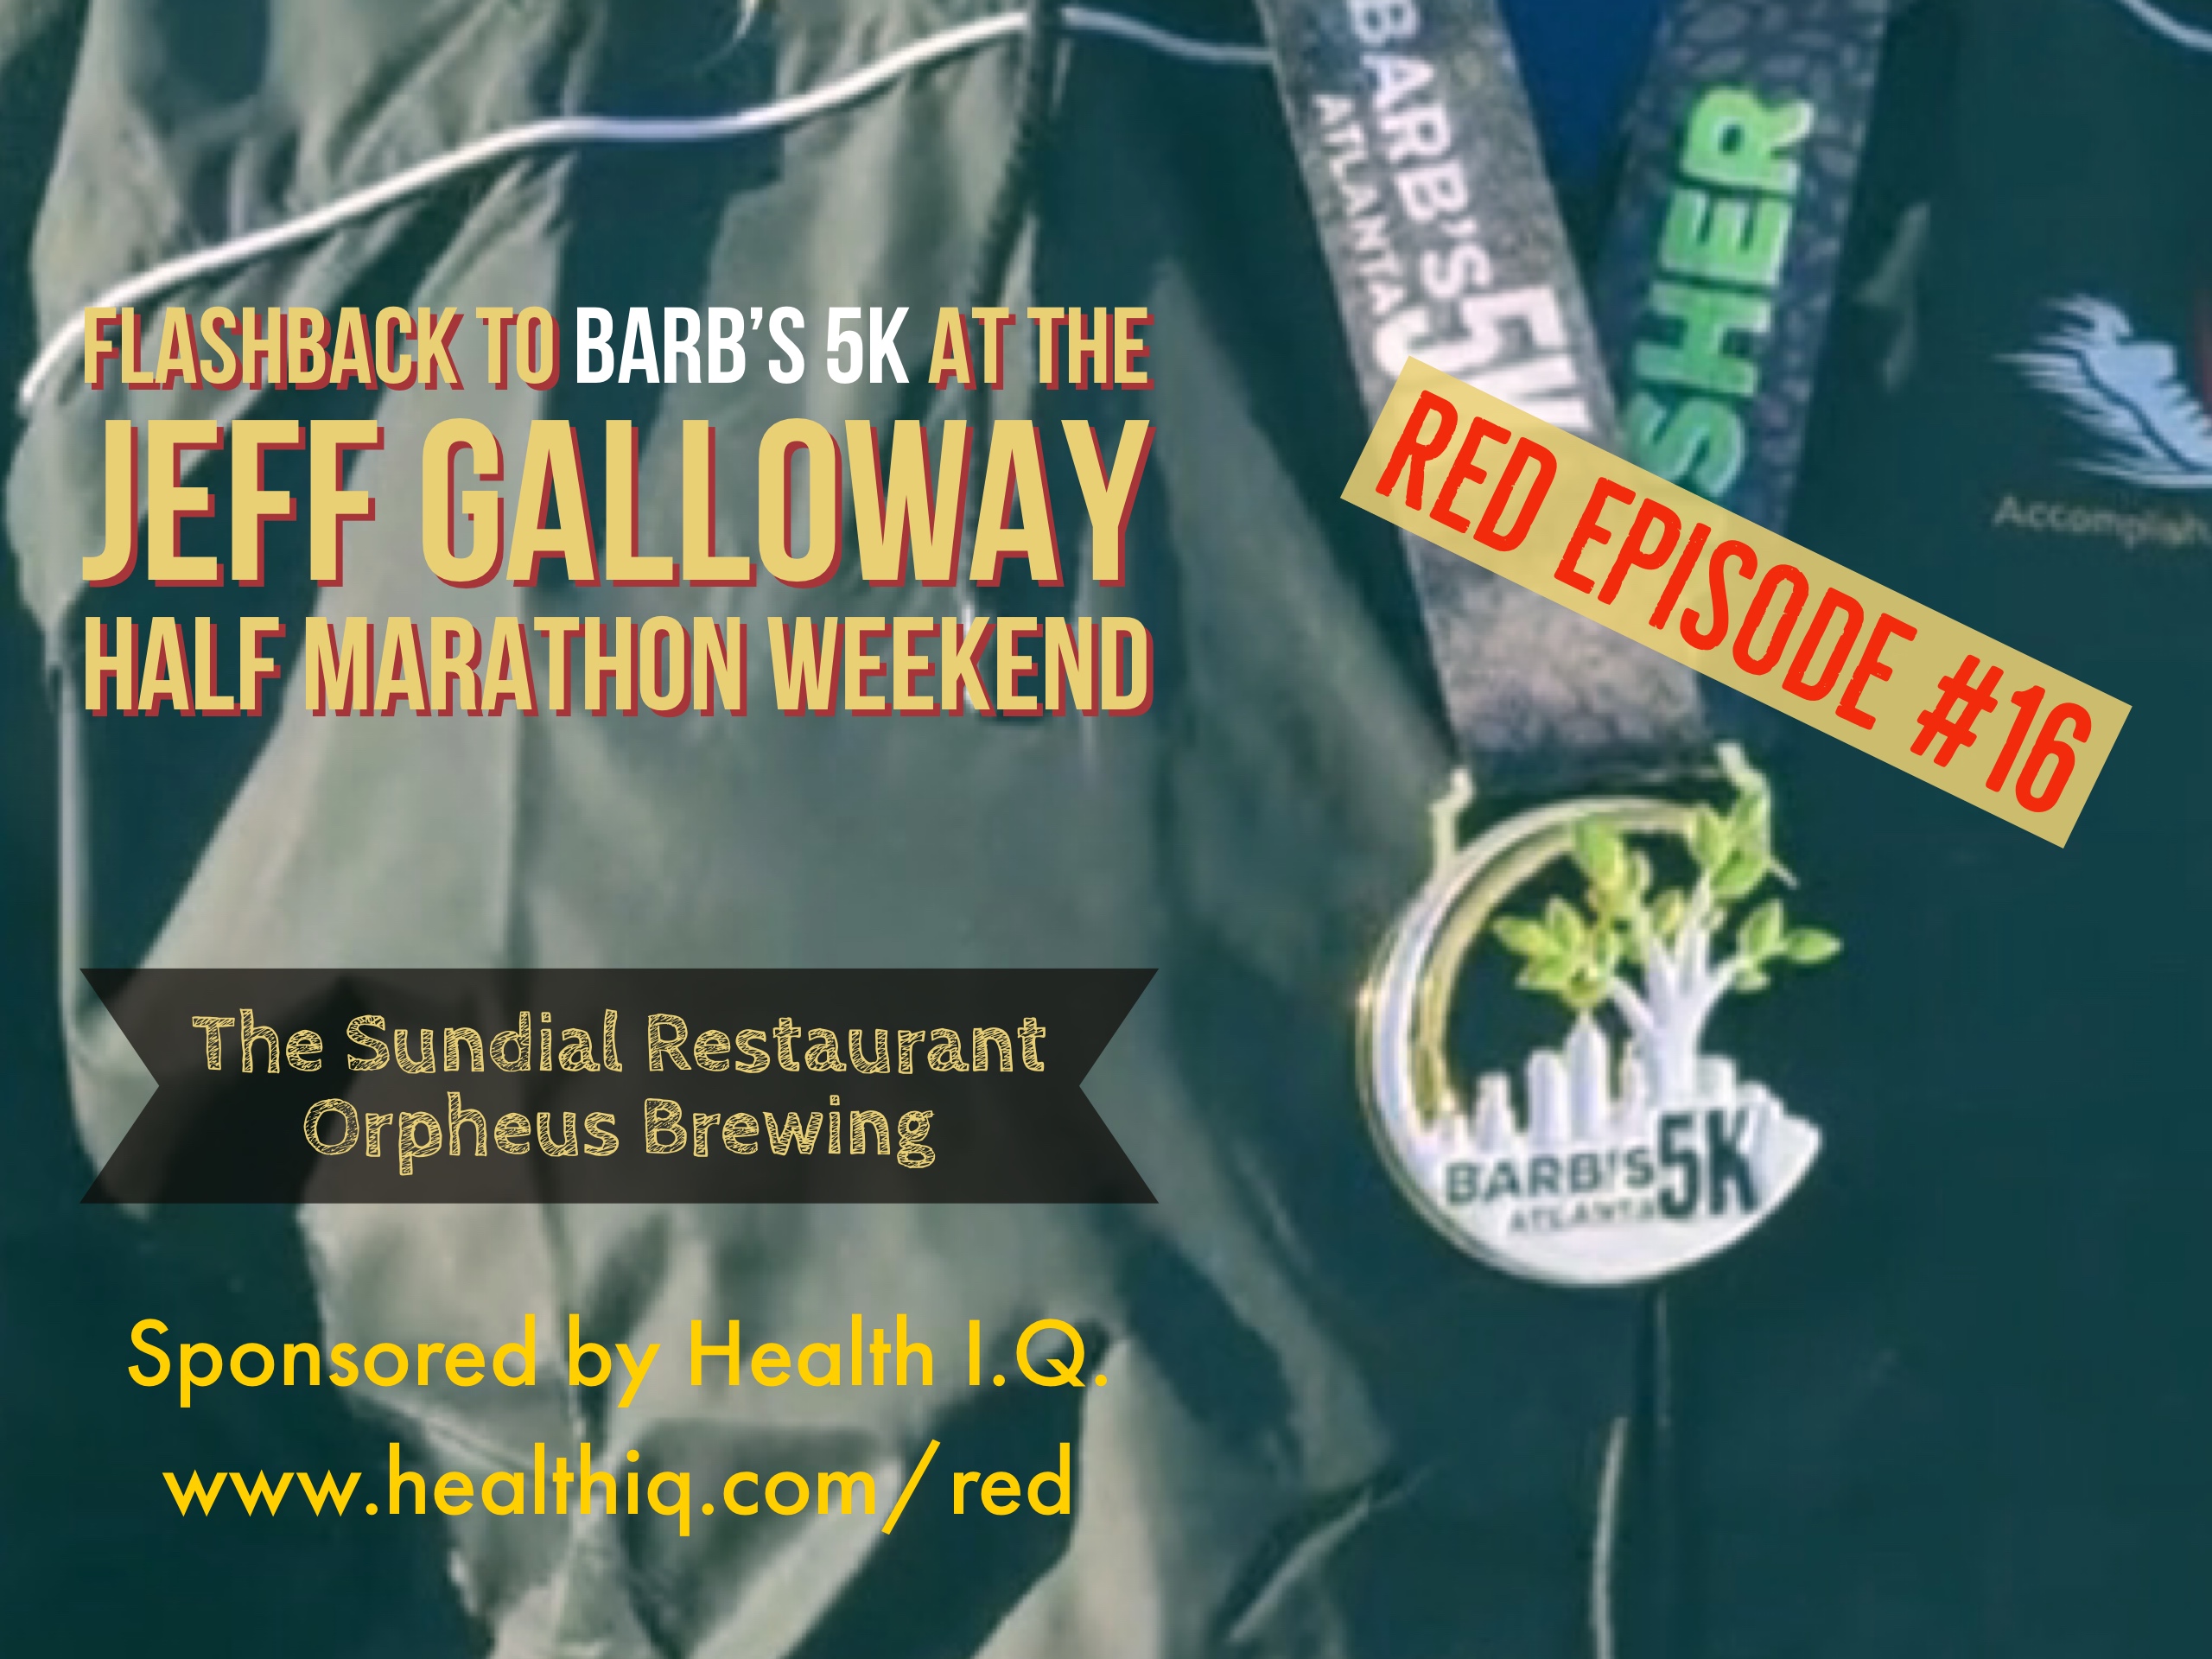 RED Episode #16:  Flashback to Barb’s 5k at the Jeff Galloway Half Marathon Weekend 2017